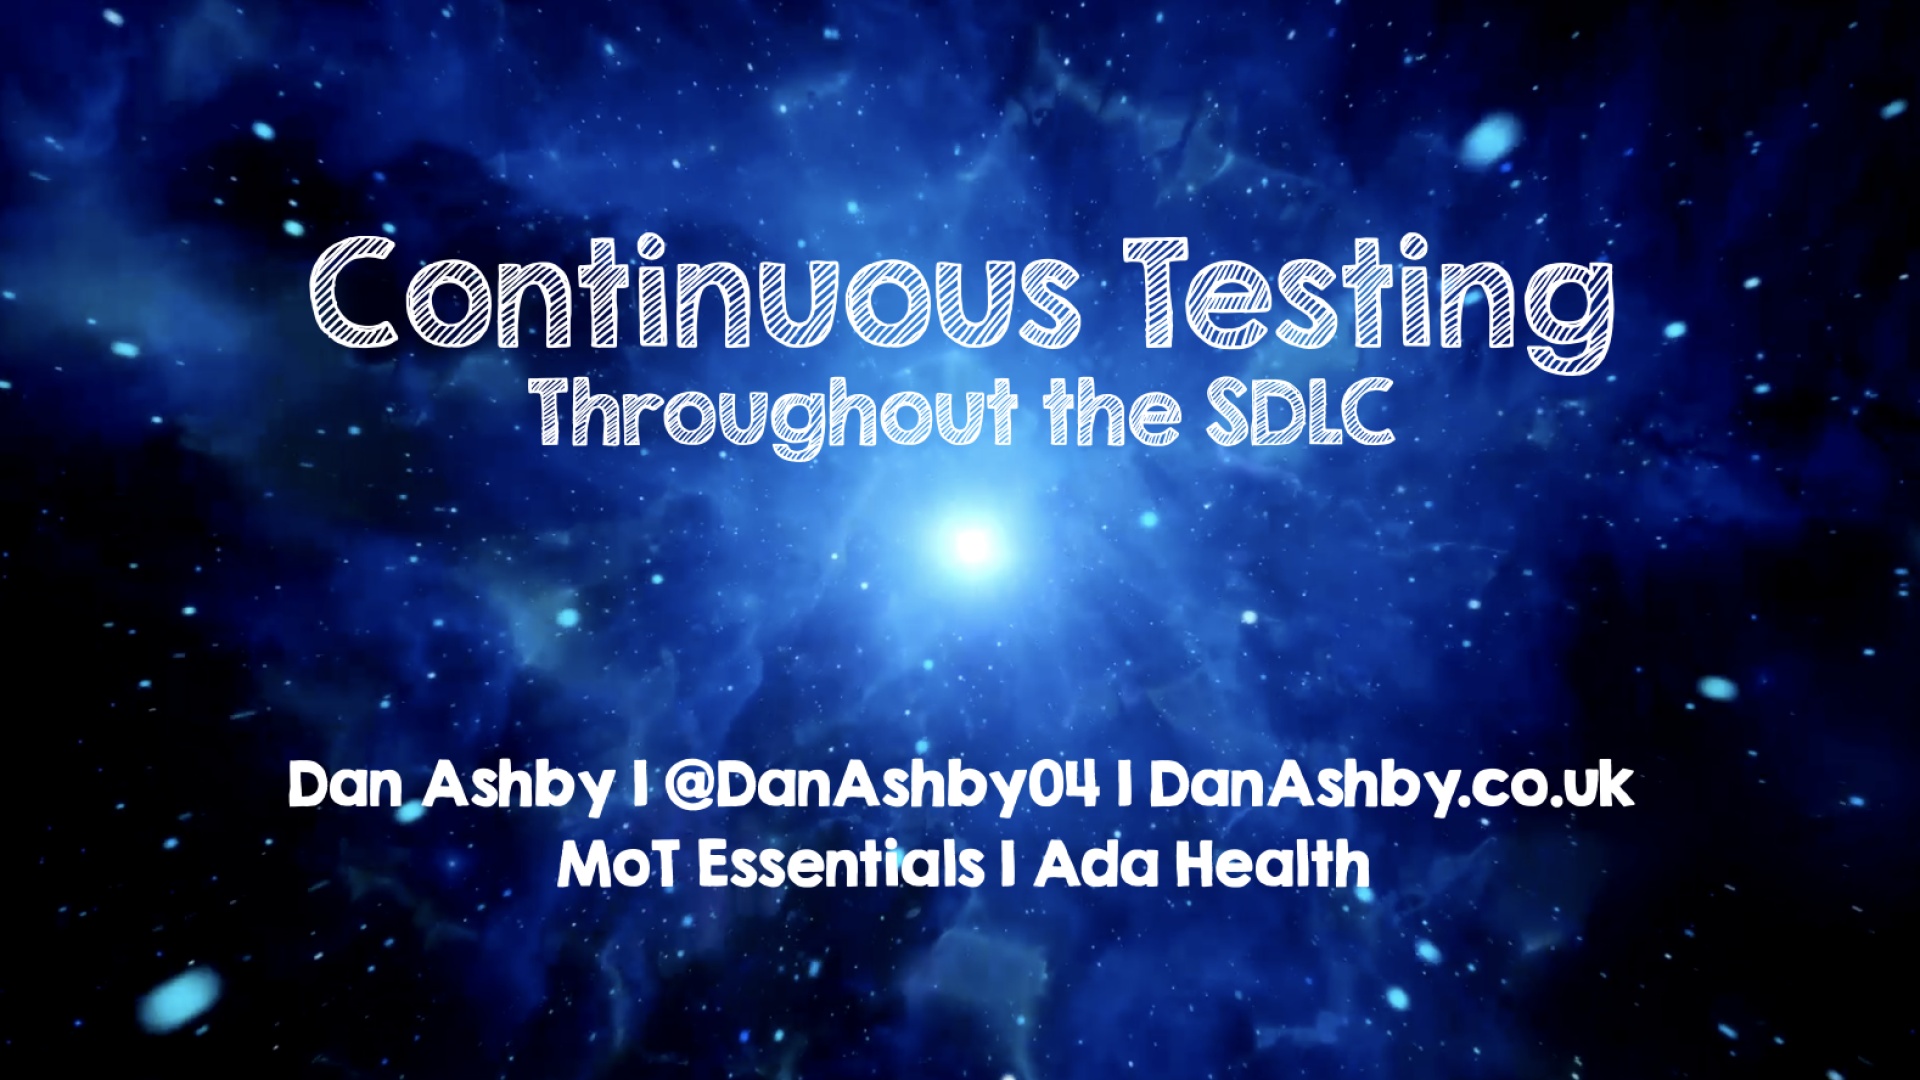 Continuous testing throughout the SDLC - Dan Ashby